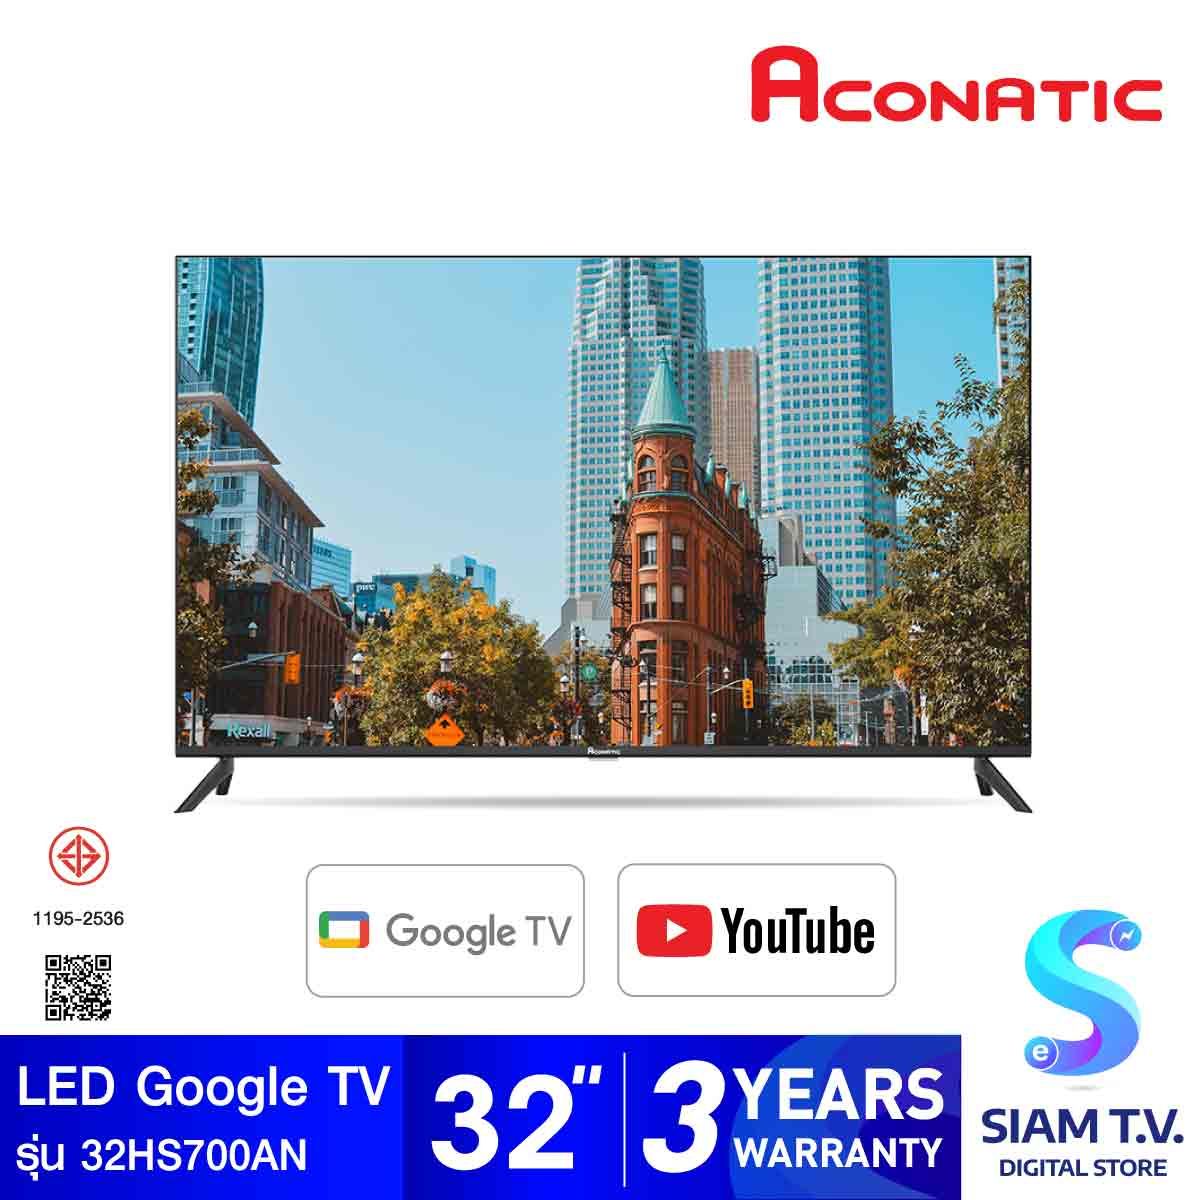 ACONATIC LED Google TV  รุ่น 32HS700AN สมาร์ททีวี ขนาด 32 นิ้ว Google TV